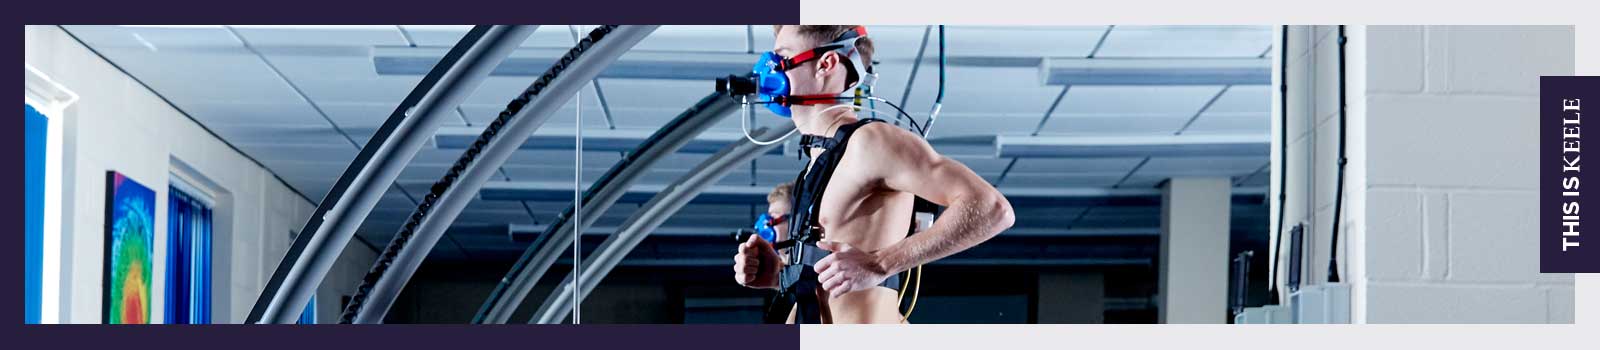 Athlete running on treadmill wearing breathing equipment